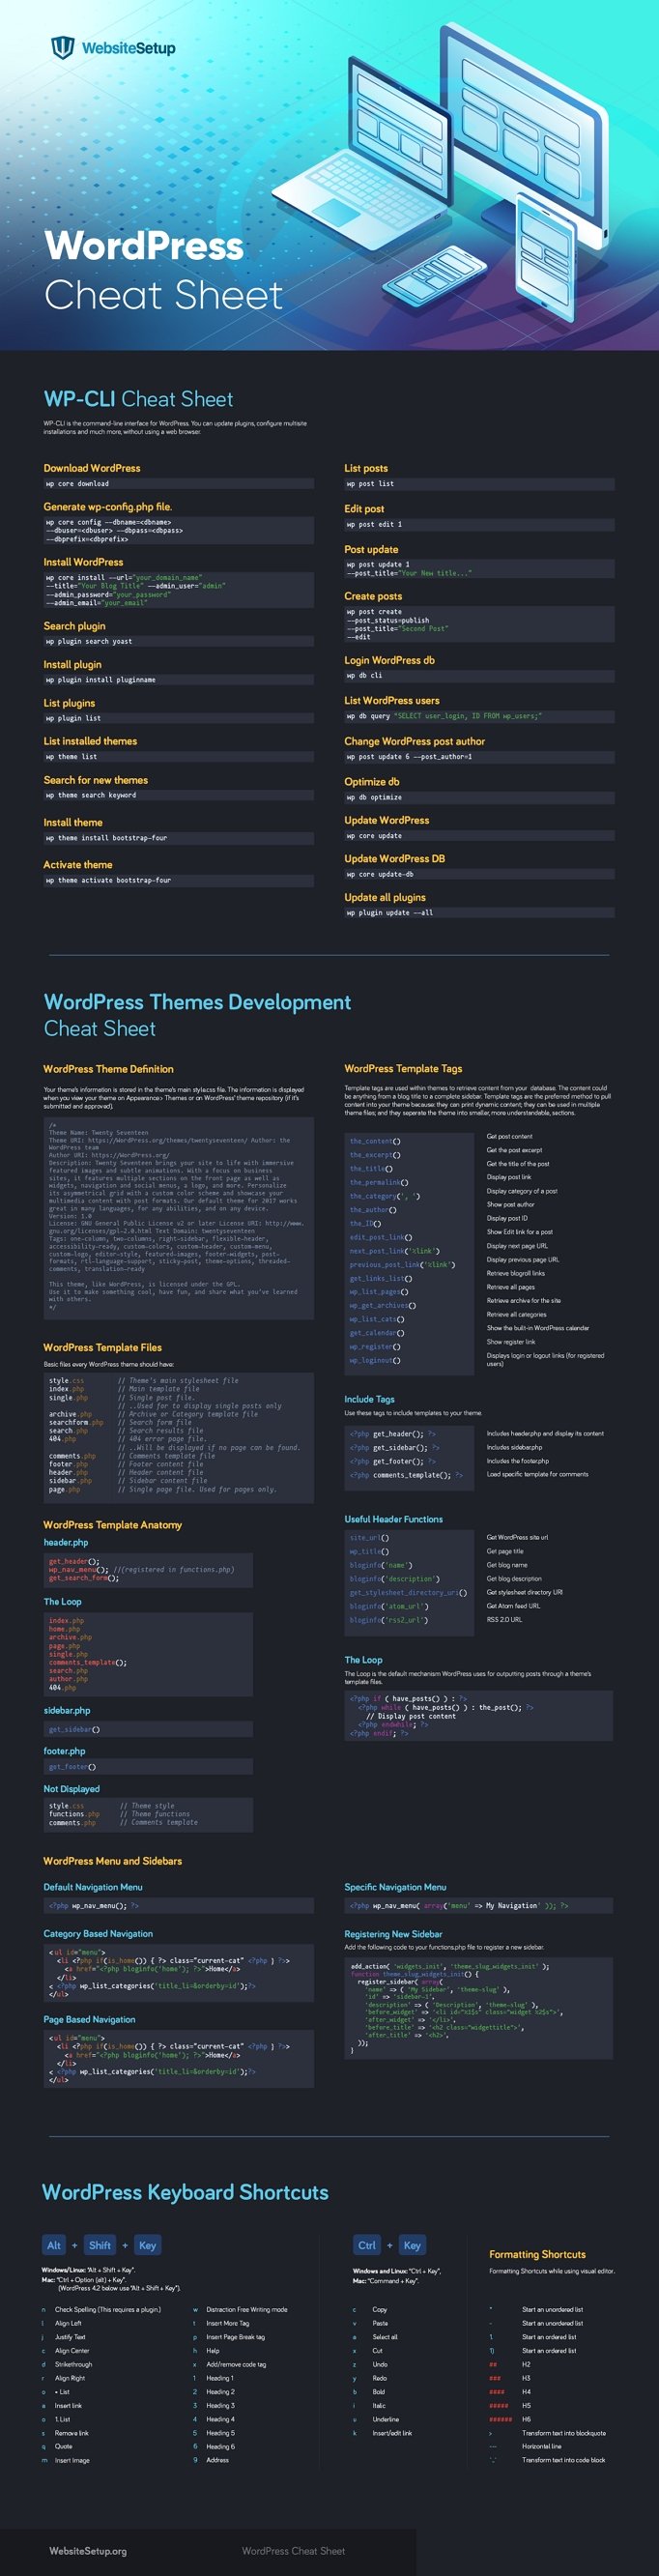 WordPress Cheat Sheet Summary